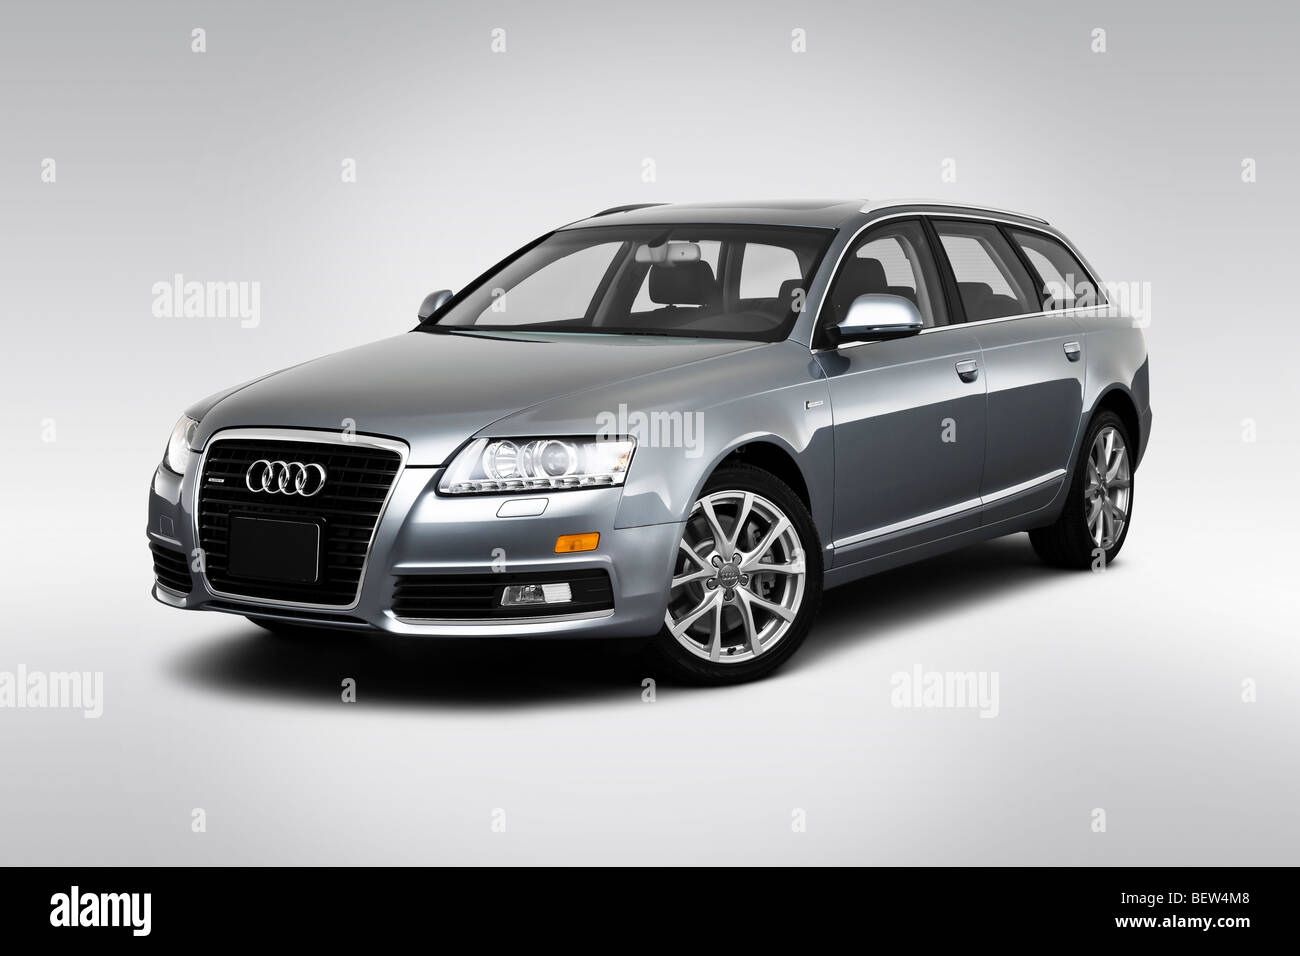 Audi a6 avant -Fotos und -Bildmaterial in hoher Auflösung – Alamy